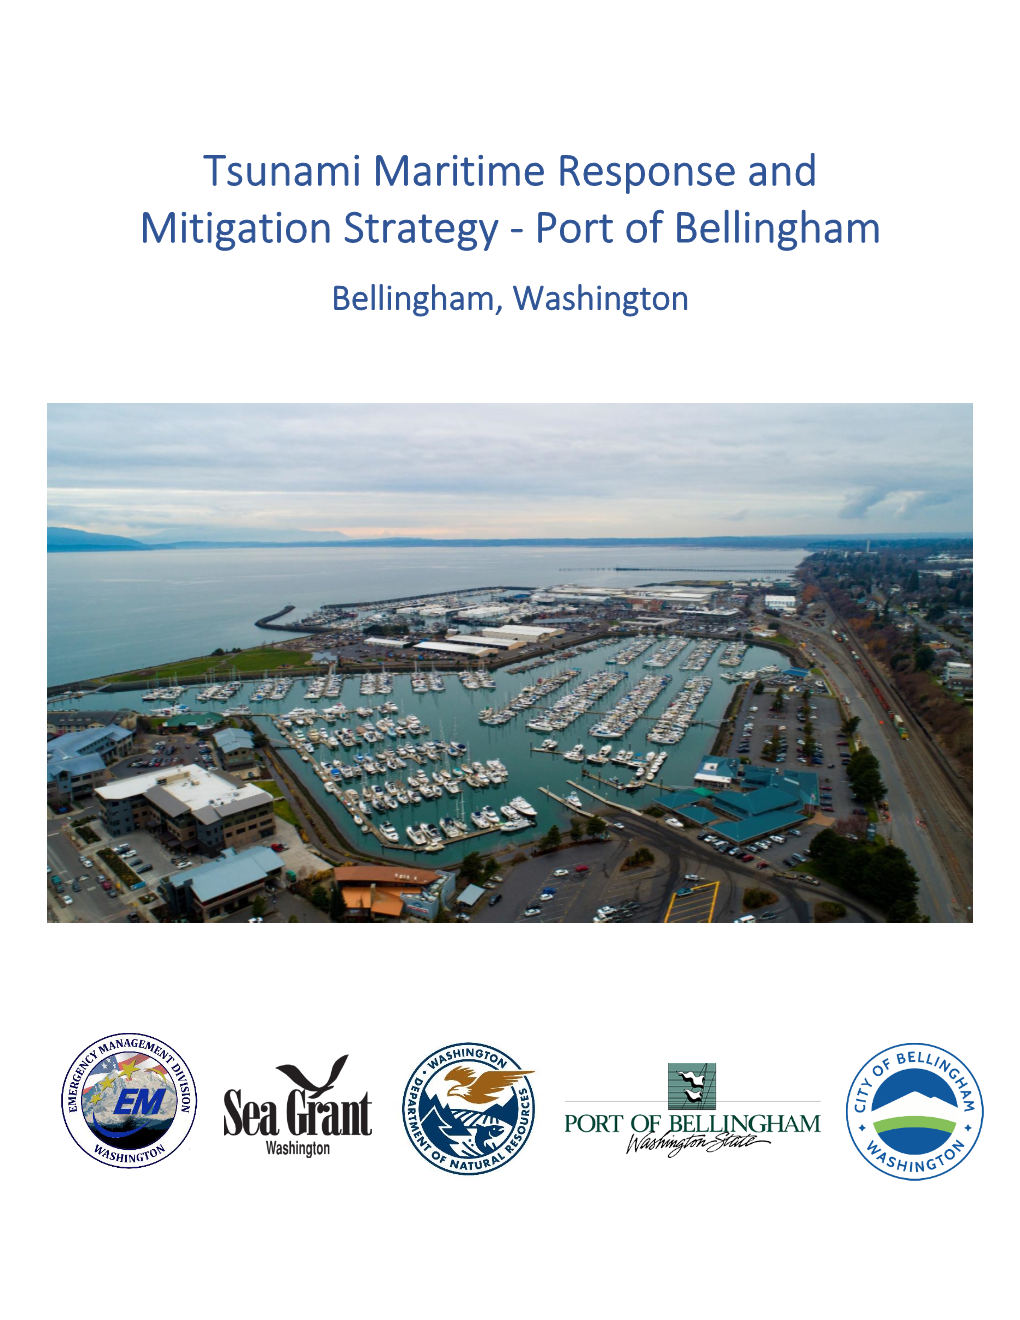 Tsunami Maritime Response and Mitigation Strategy - Port of Bellingham Bellingham, Washington